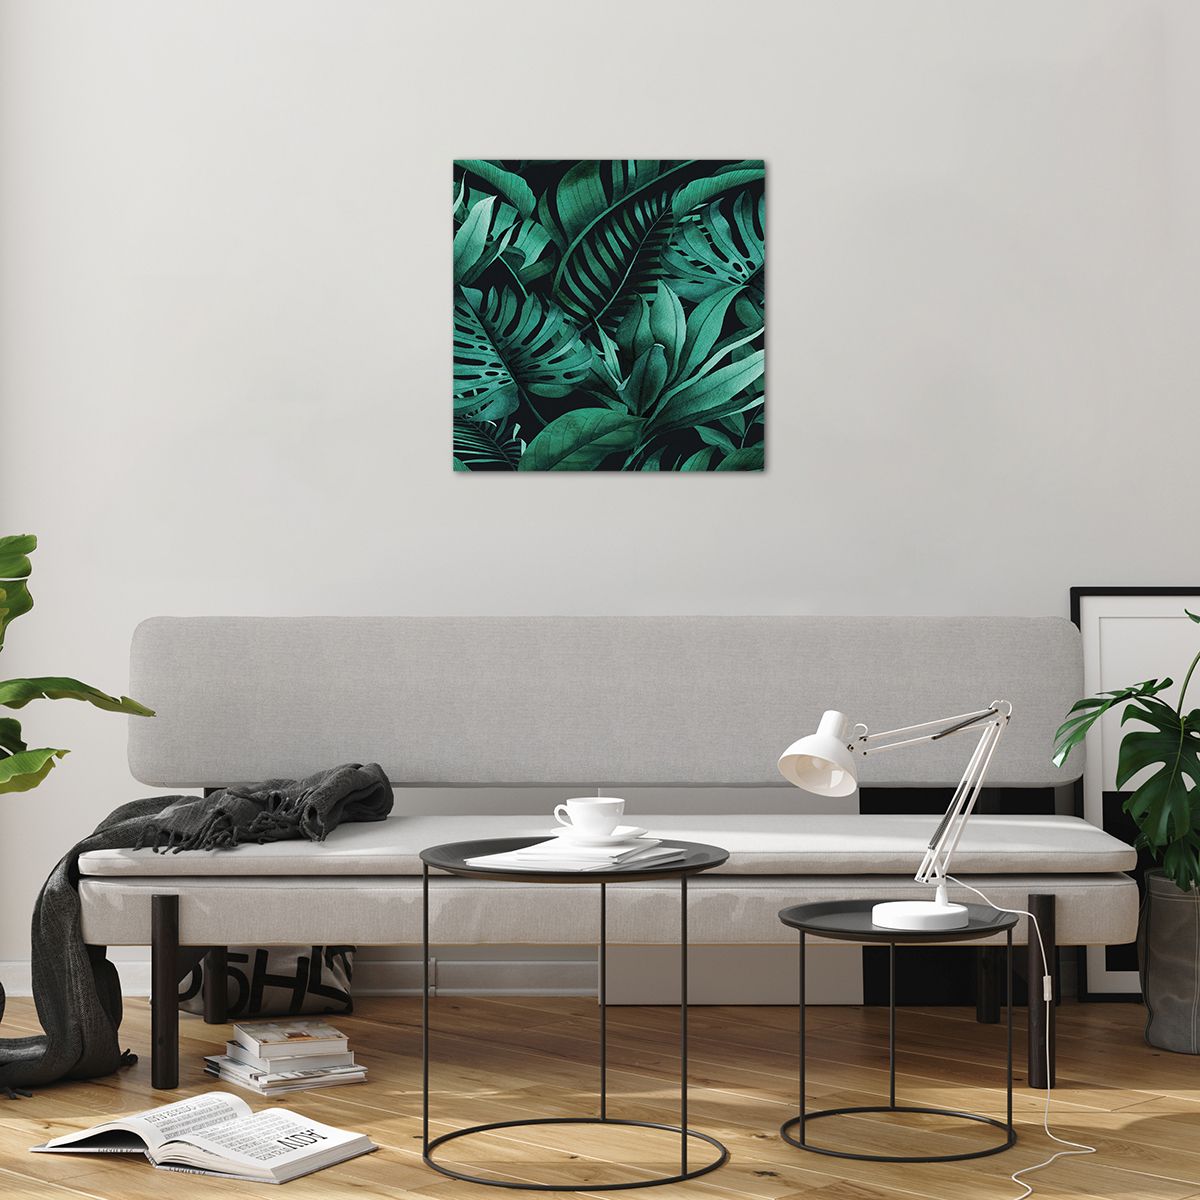 Bild på glas Exotisk Planta, Bild på glas Palmblad, Bild på glas Monstera Löv, Bild på glas Natur, Bild på glas Tropikerna